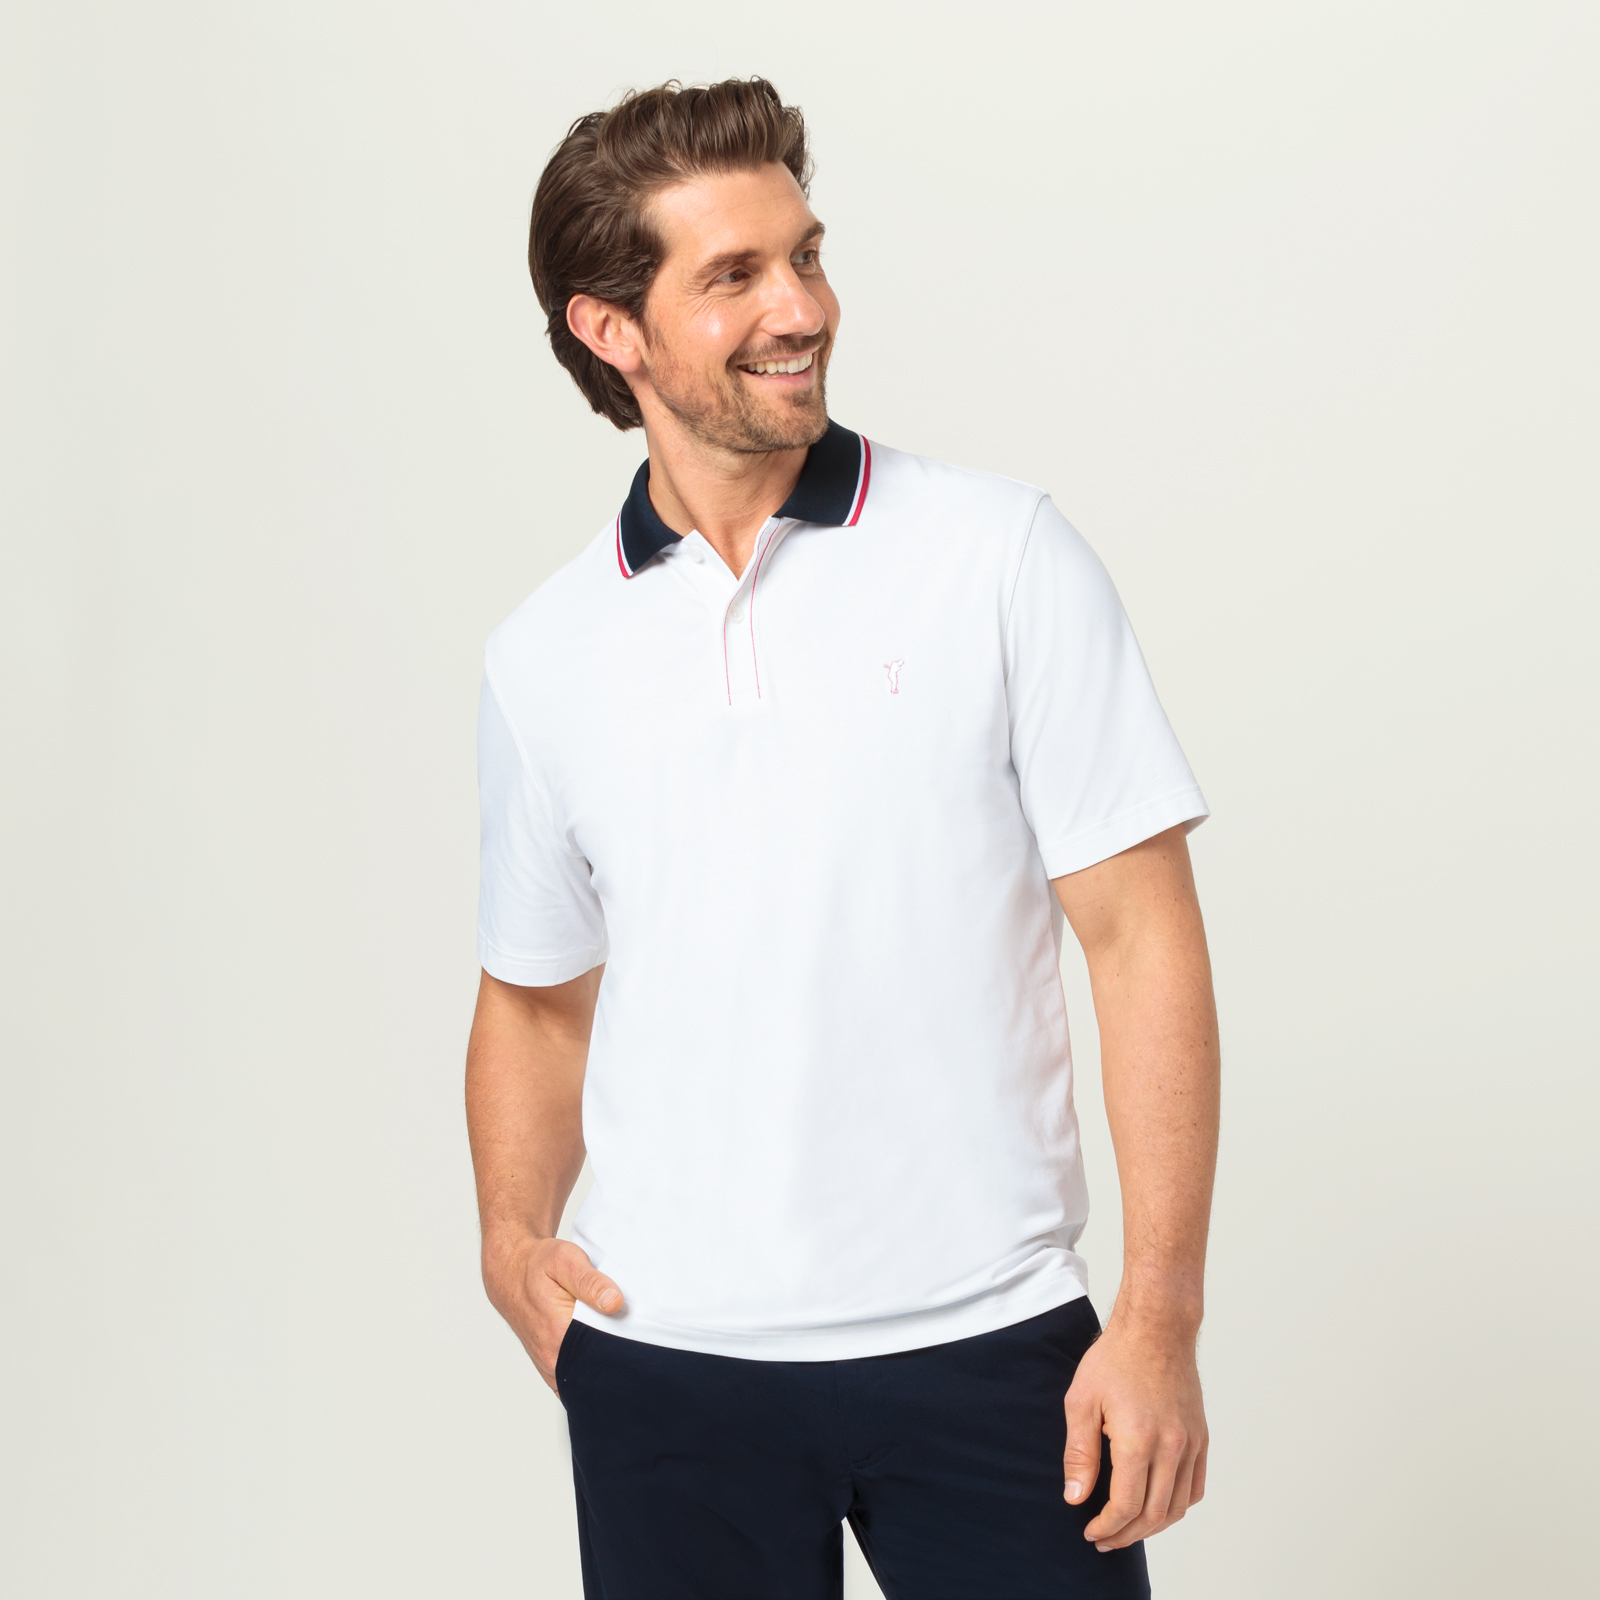 Men's golf polo shirt with sun protection 